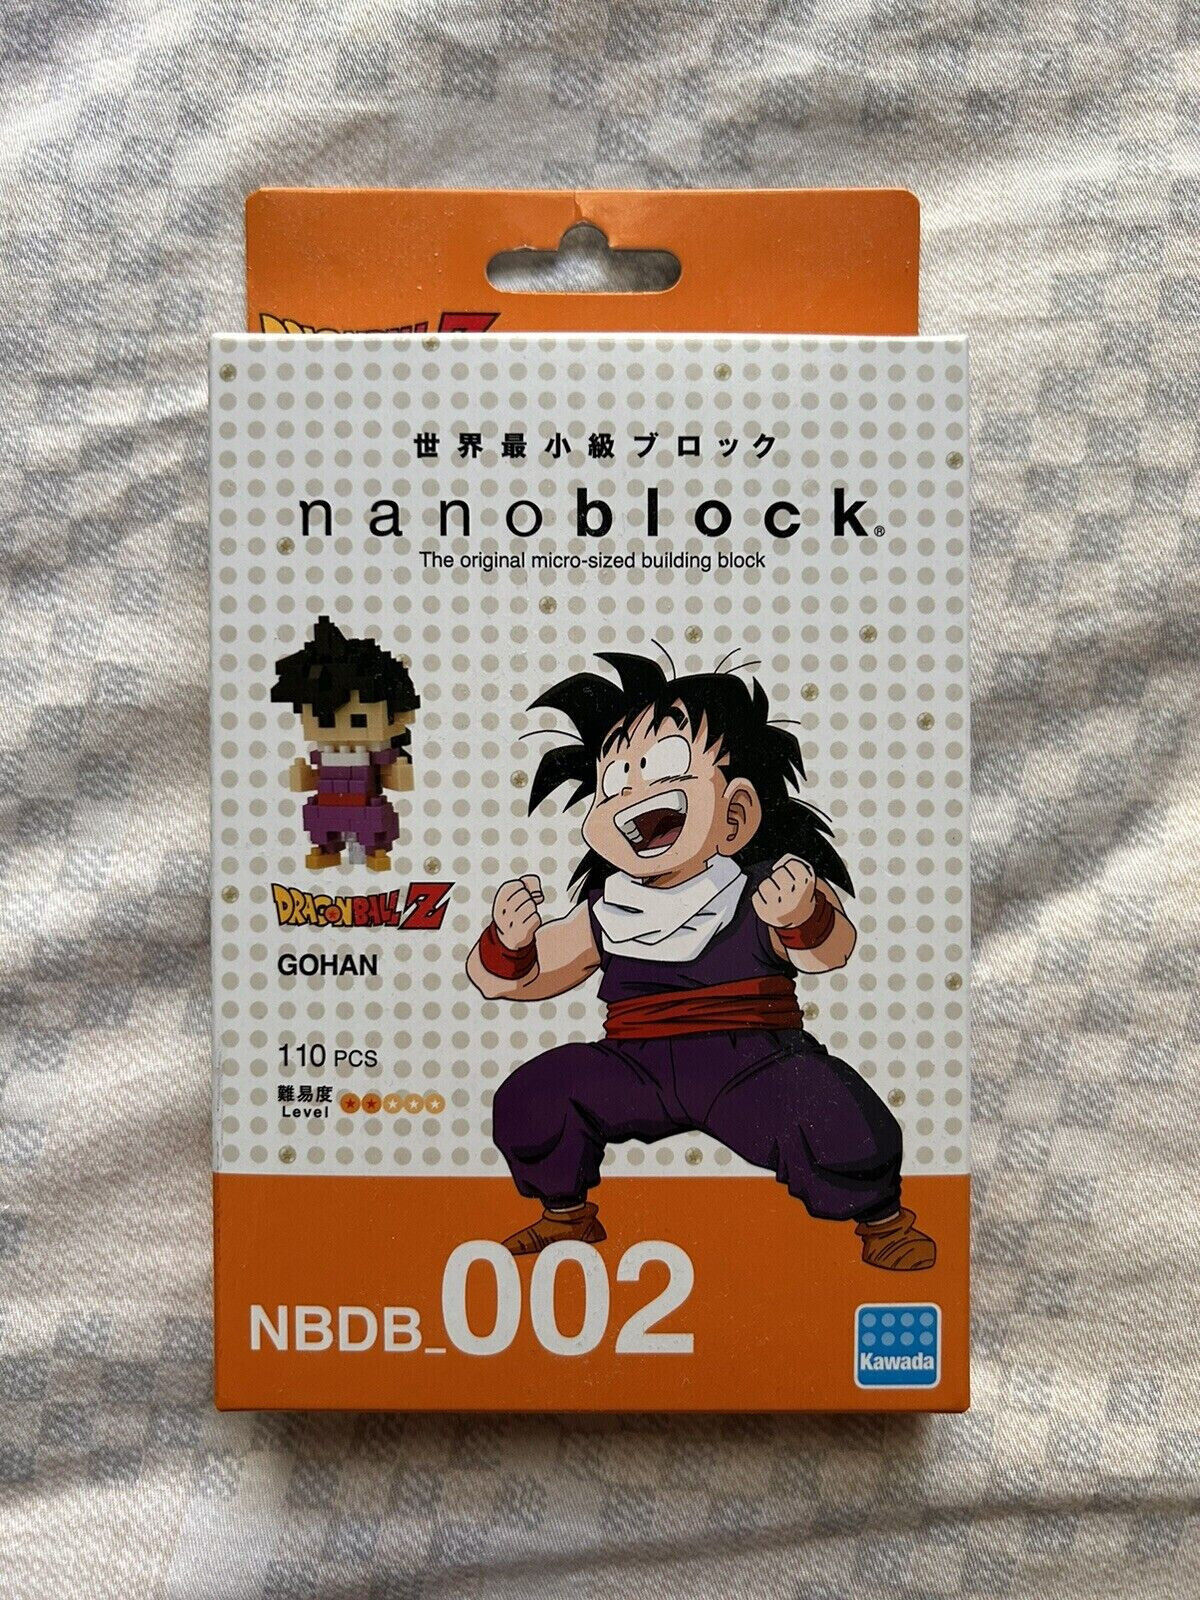 Japanese Smallest Block Nanoblock Dragon Ball Z Gohan NBDB 002